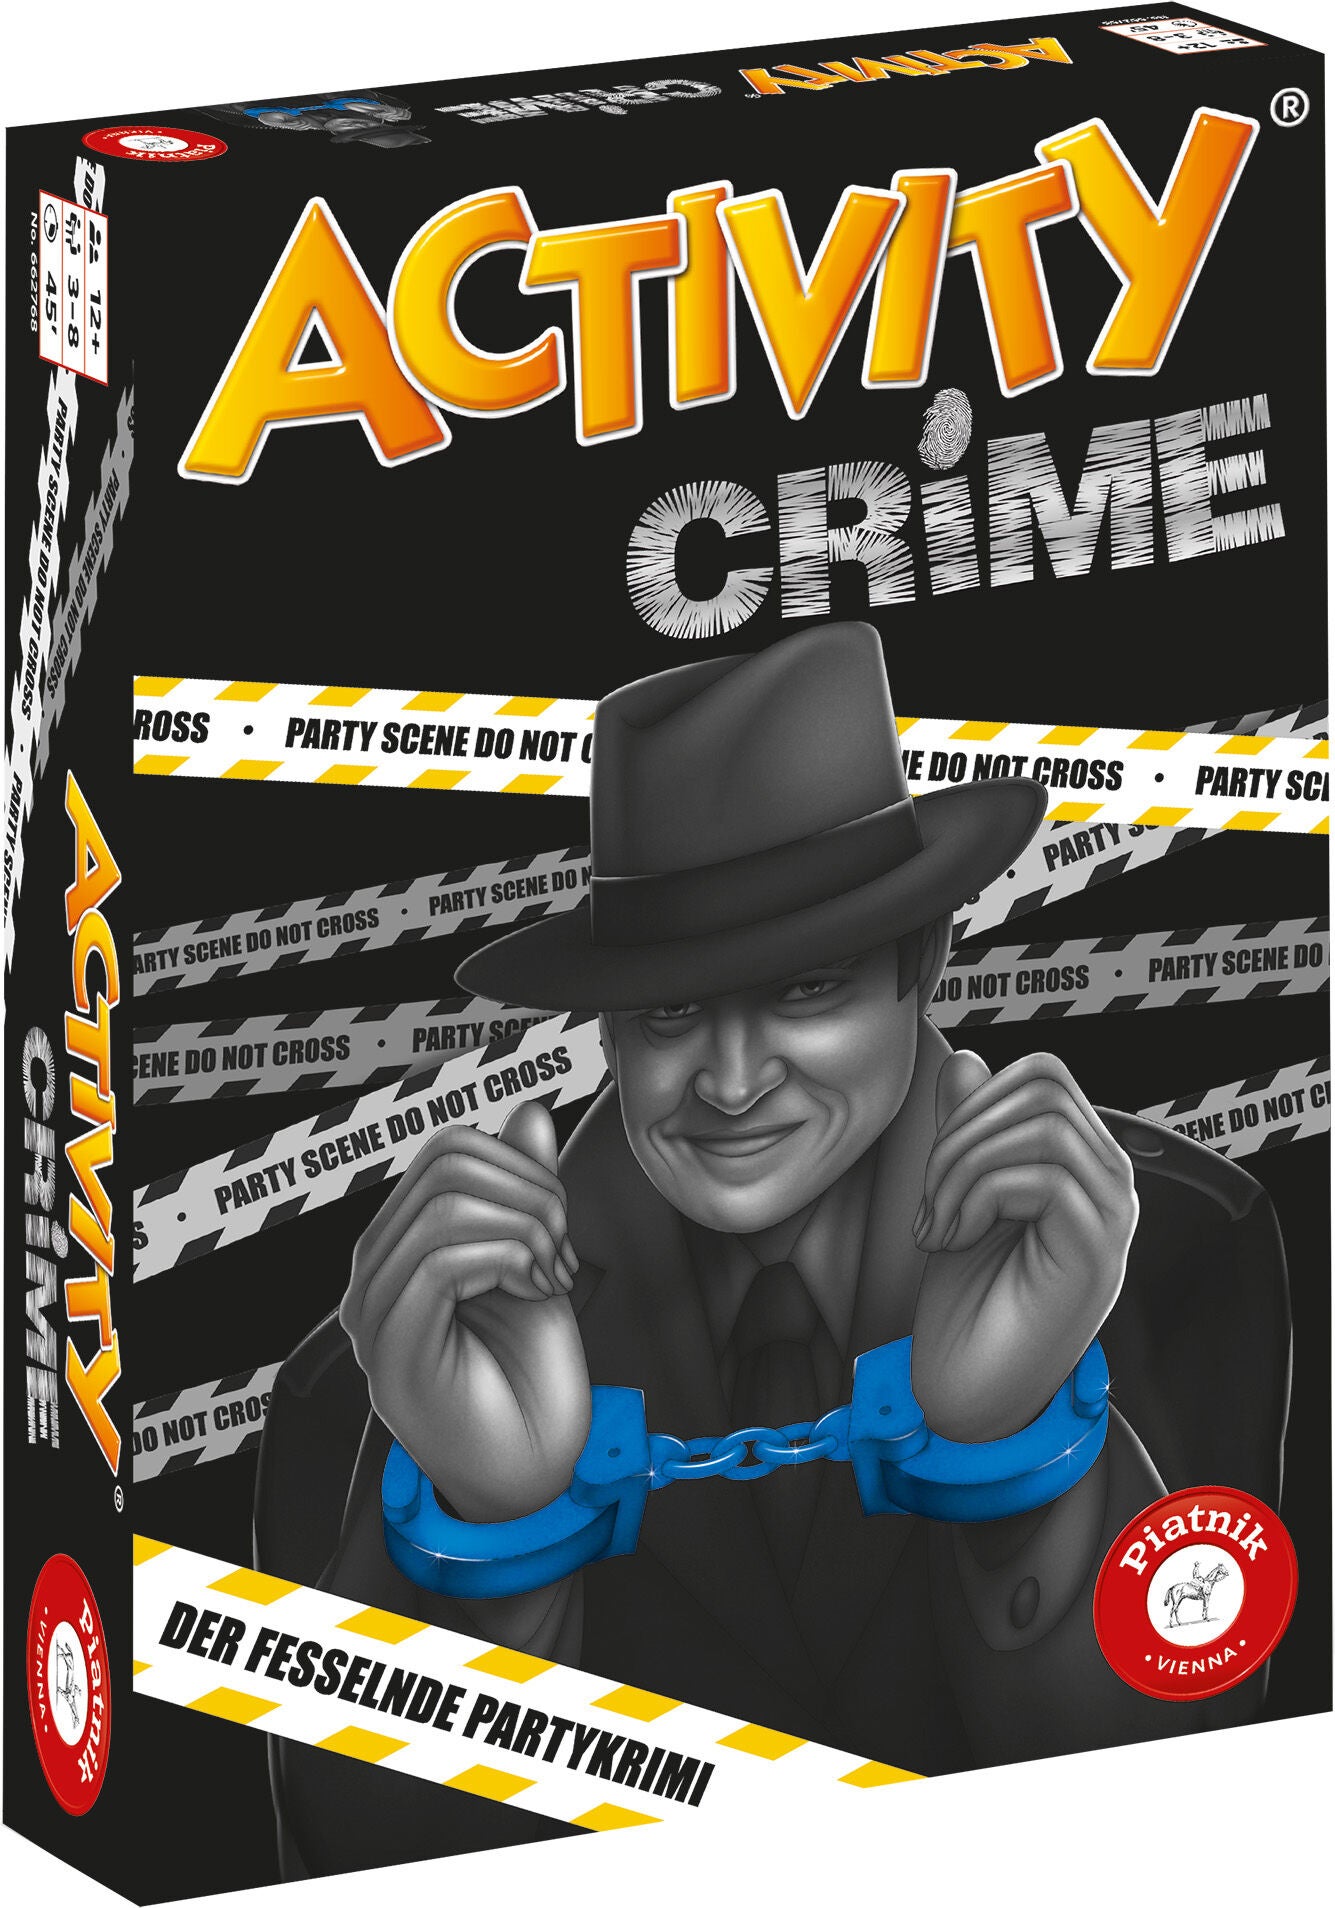 Activity Crime von Piatnik